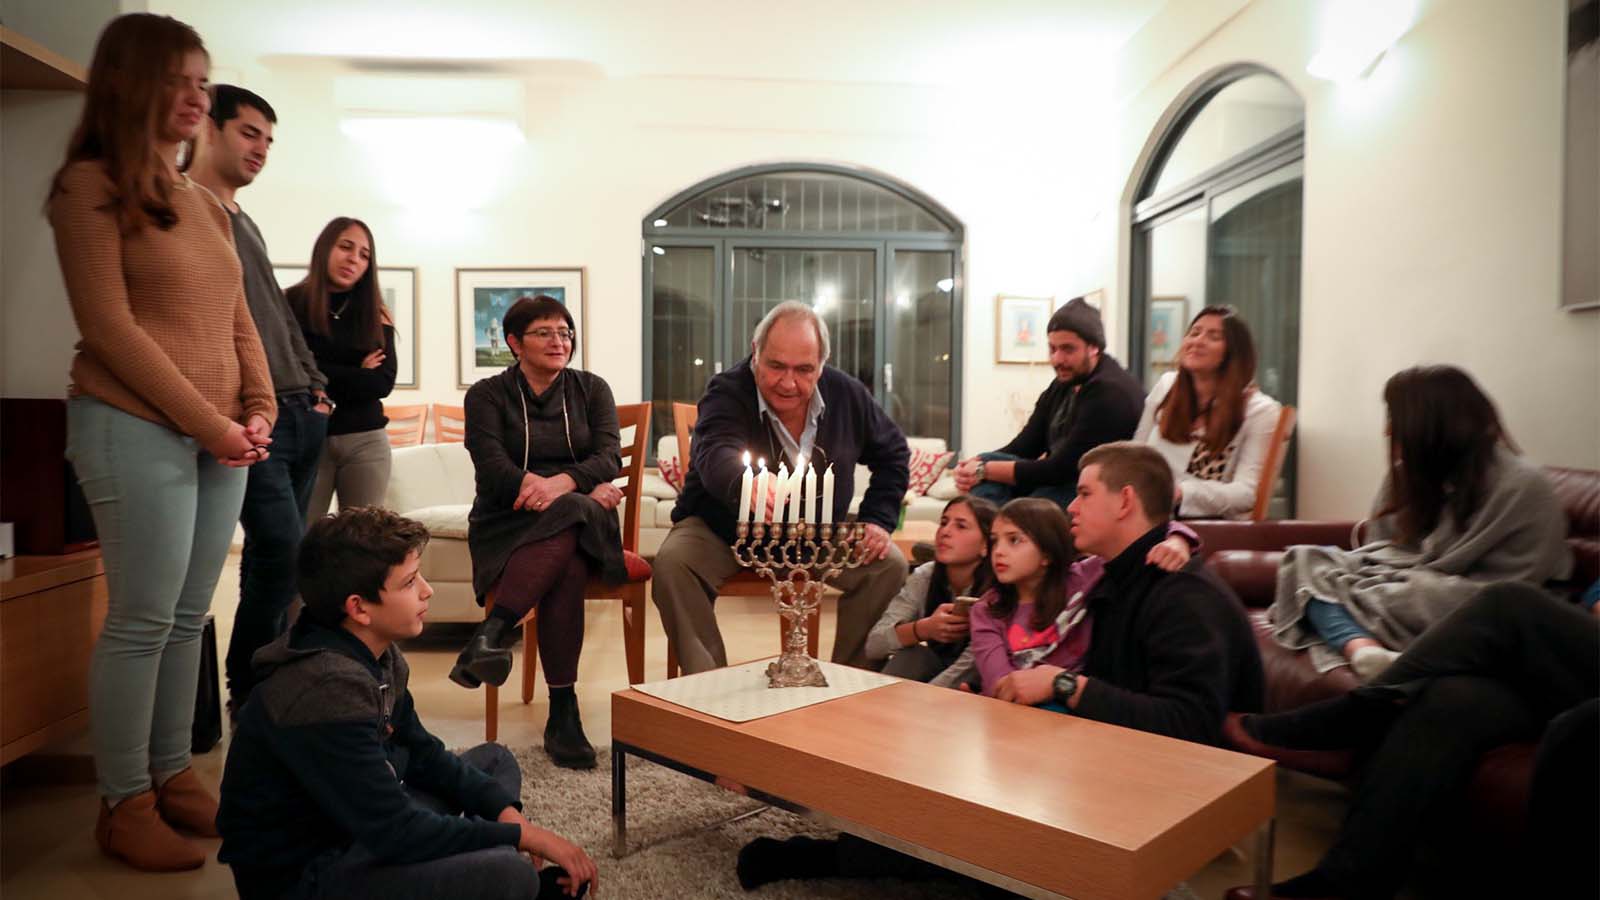 A family lights Hannukah candles, 2016 (Photograph: Nati Shohet / Flash90)